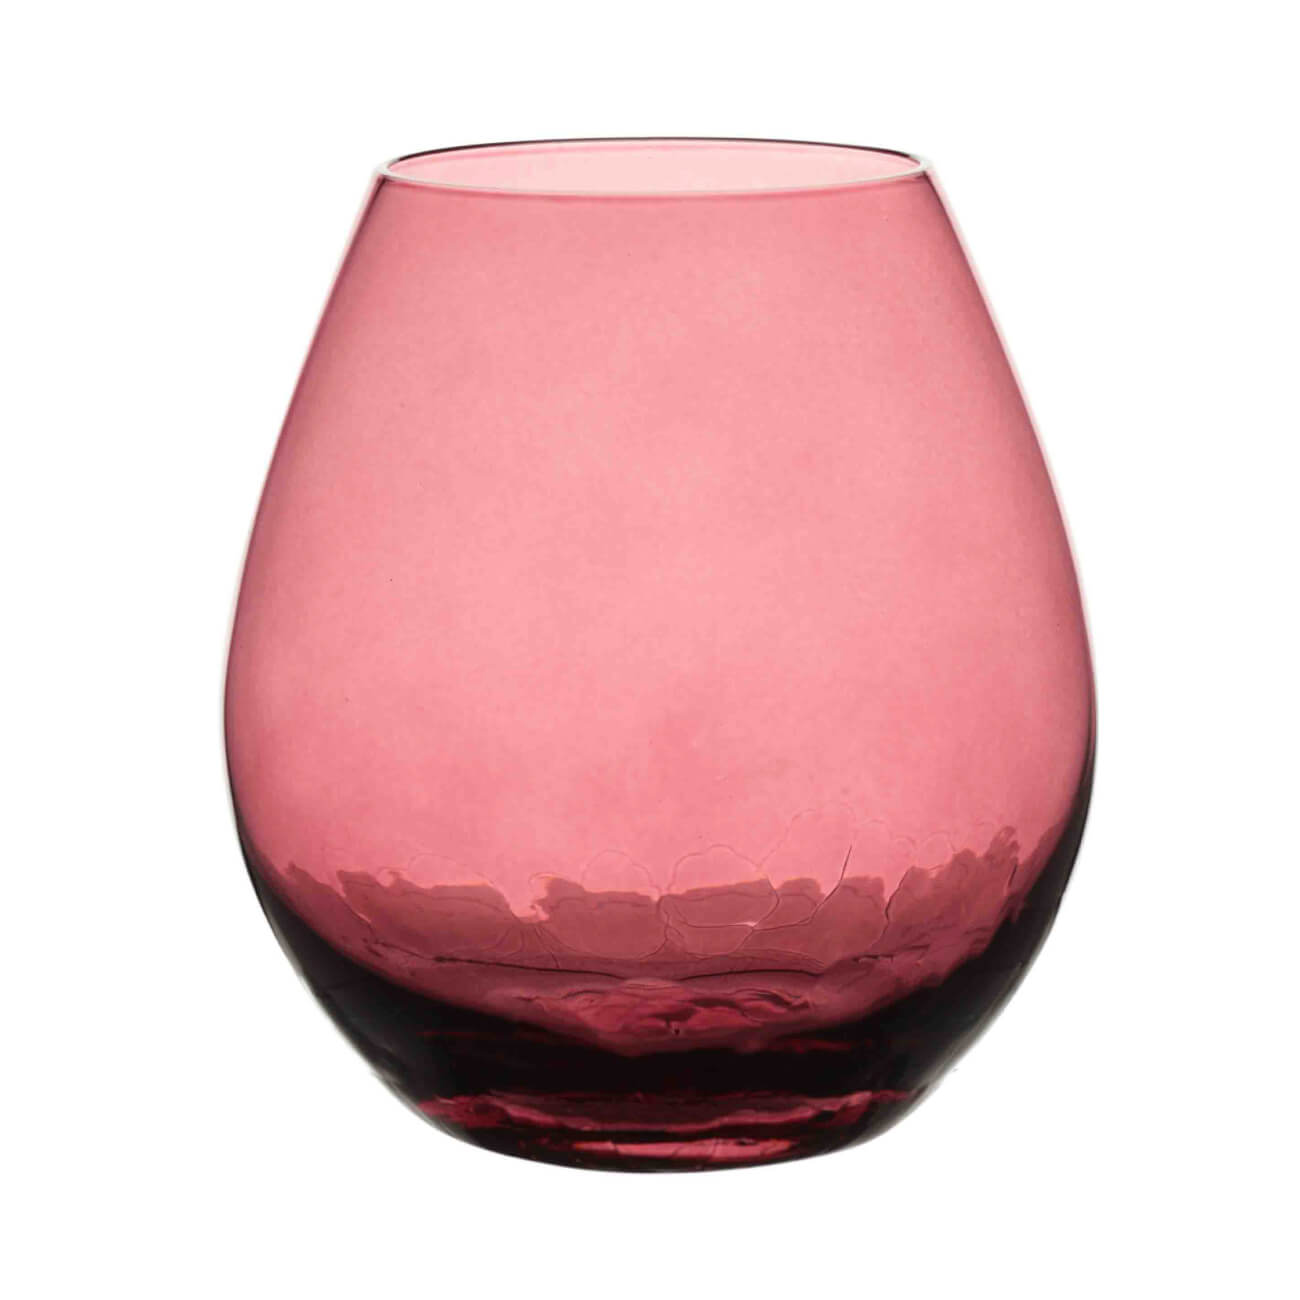 Стакан для виски, 450 мл, стекло, бордовый, Кракелюр, Ice color стакан для виски большого успеха 250 мл